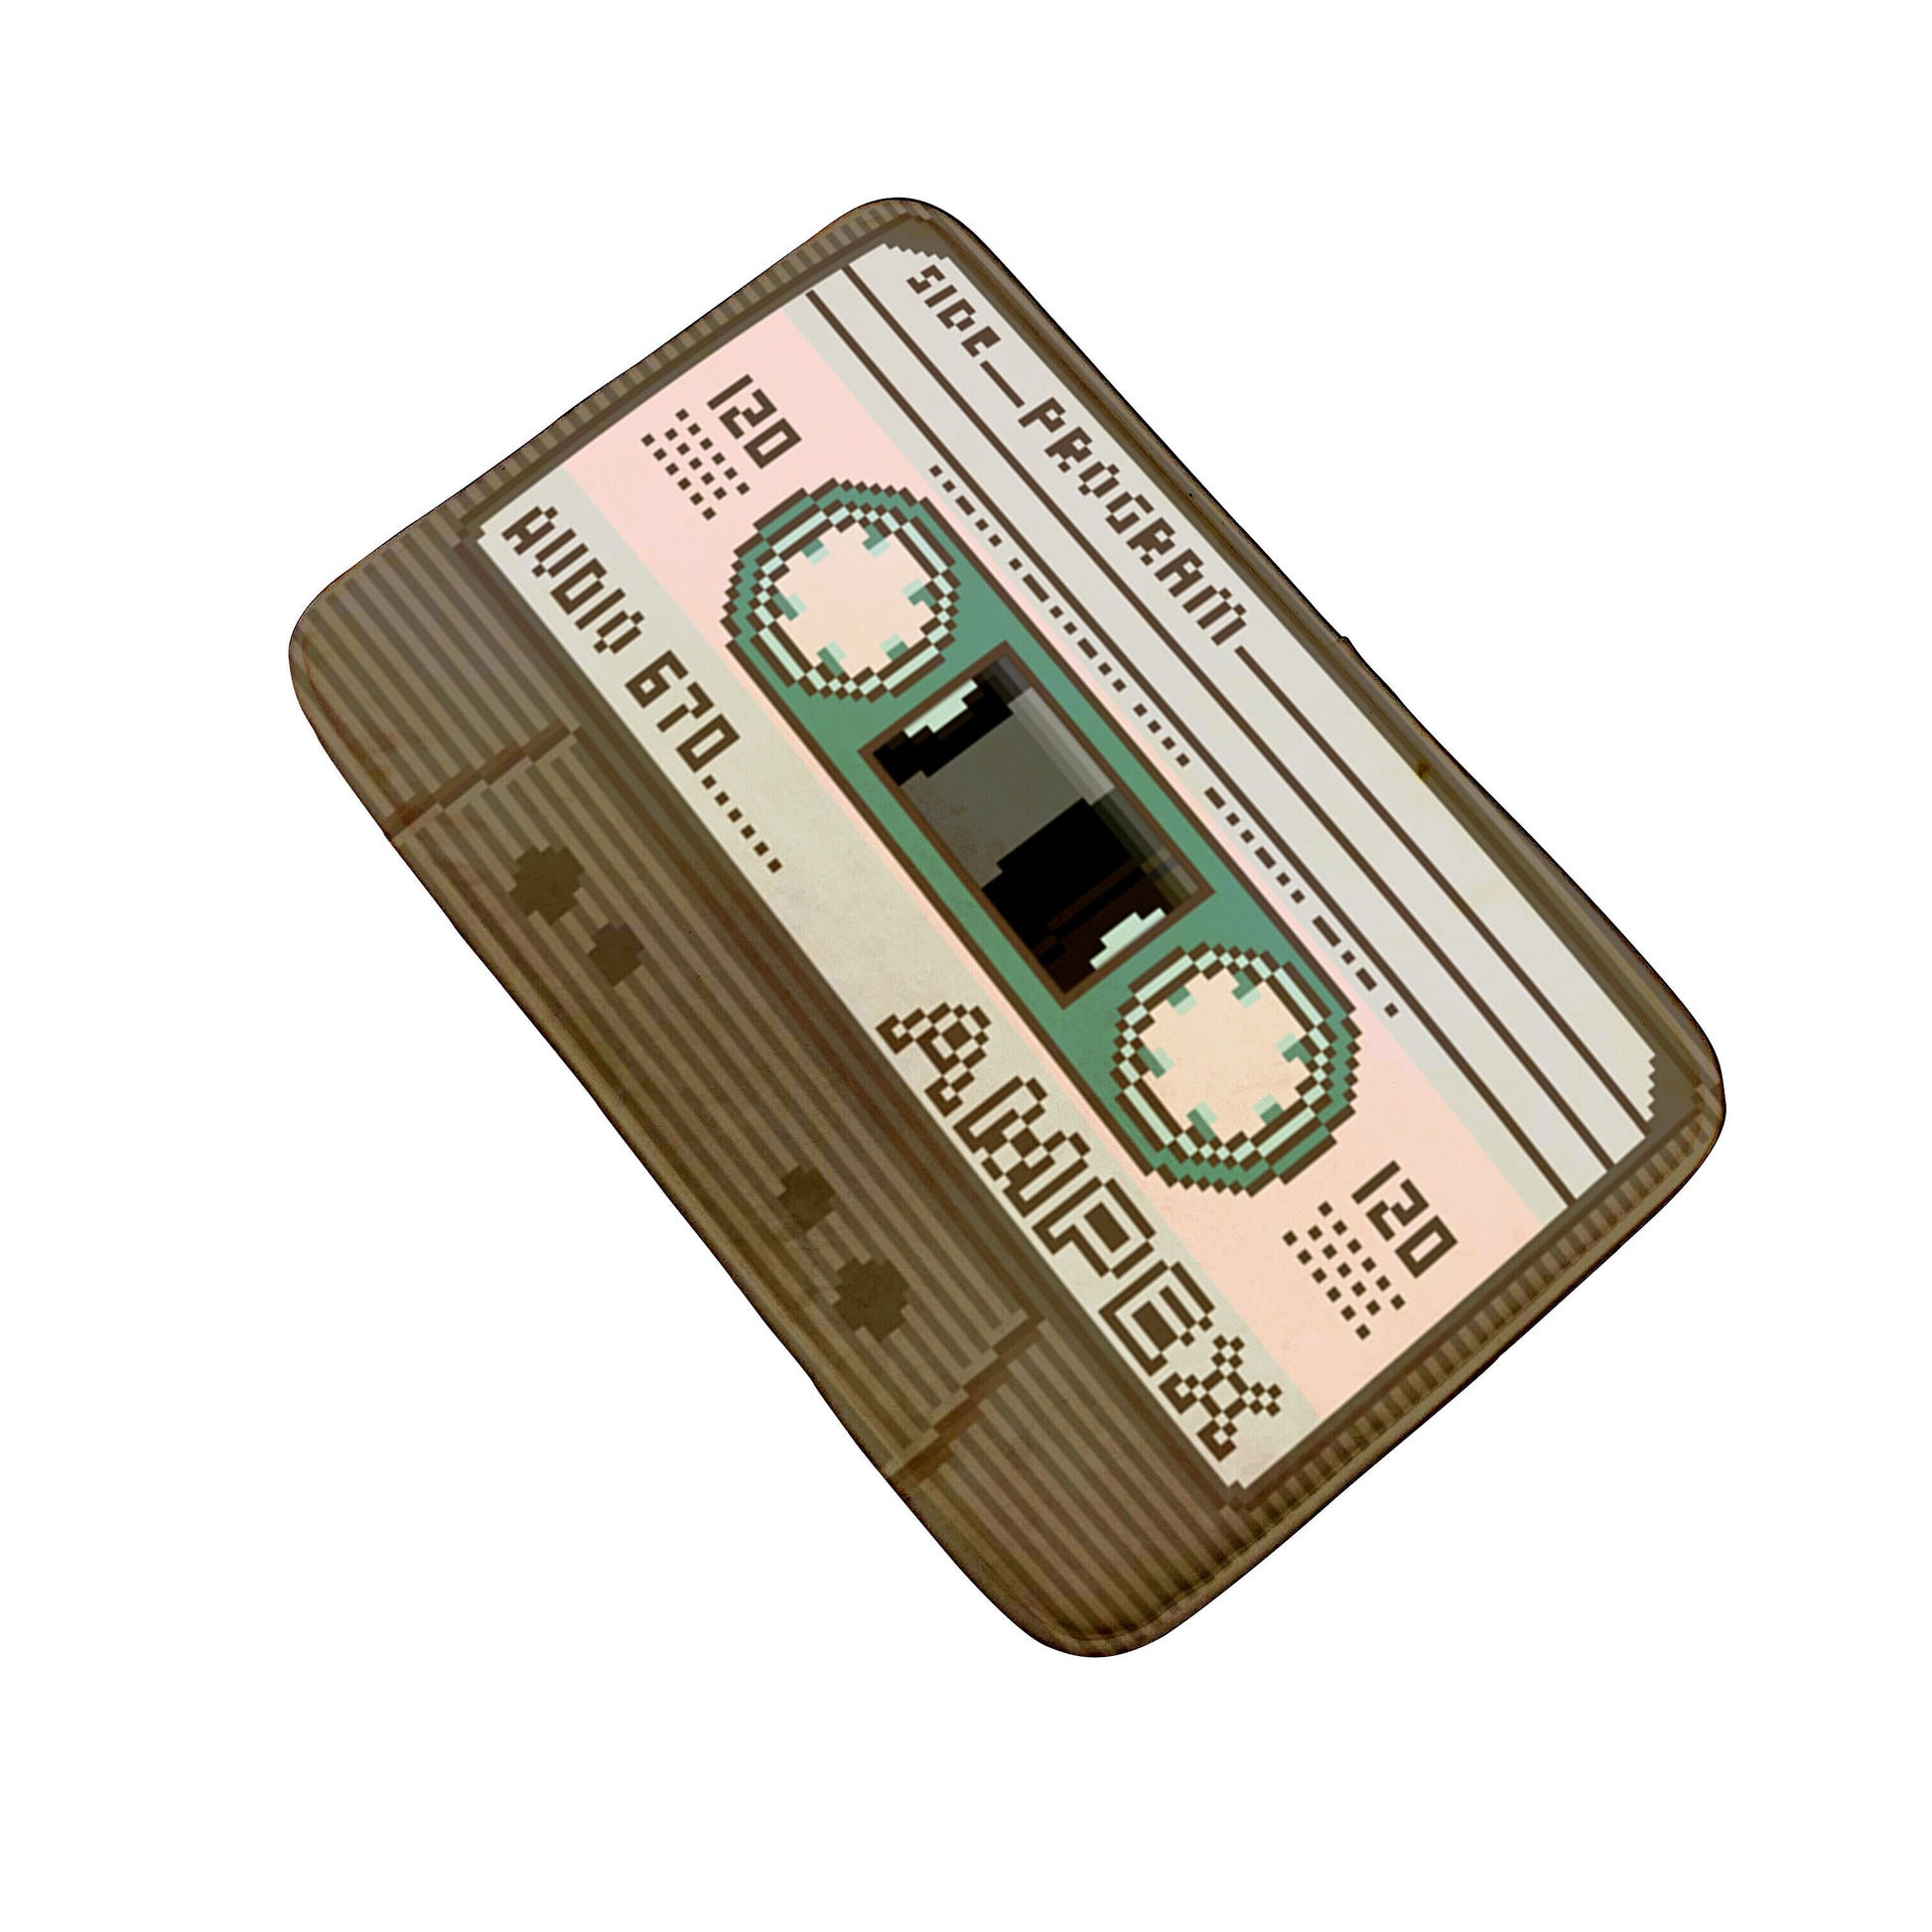 TEEK - A Bunch of Cassette Tape Rugs HOME DECOR theteekdotcom 16 15.75x23.62in 20-25 days